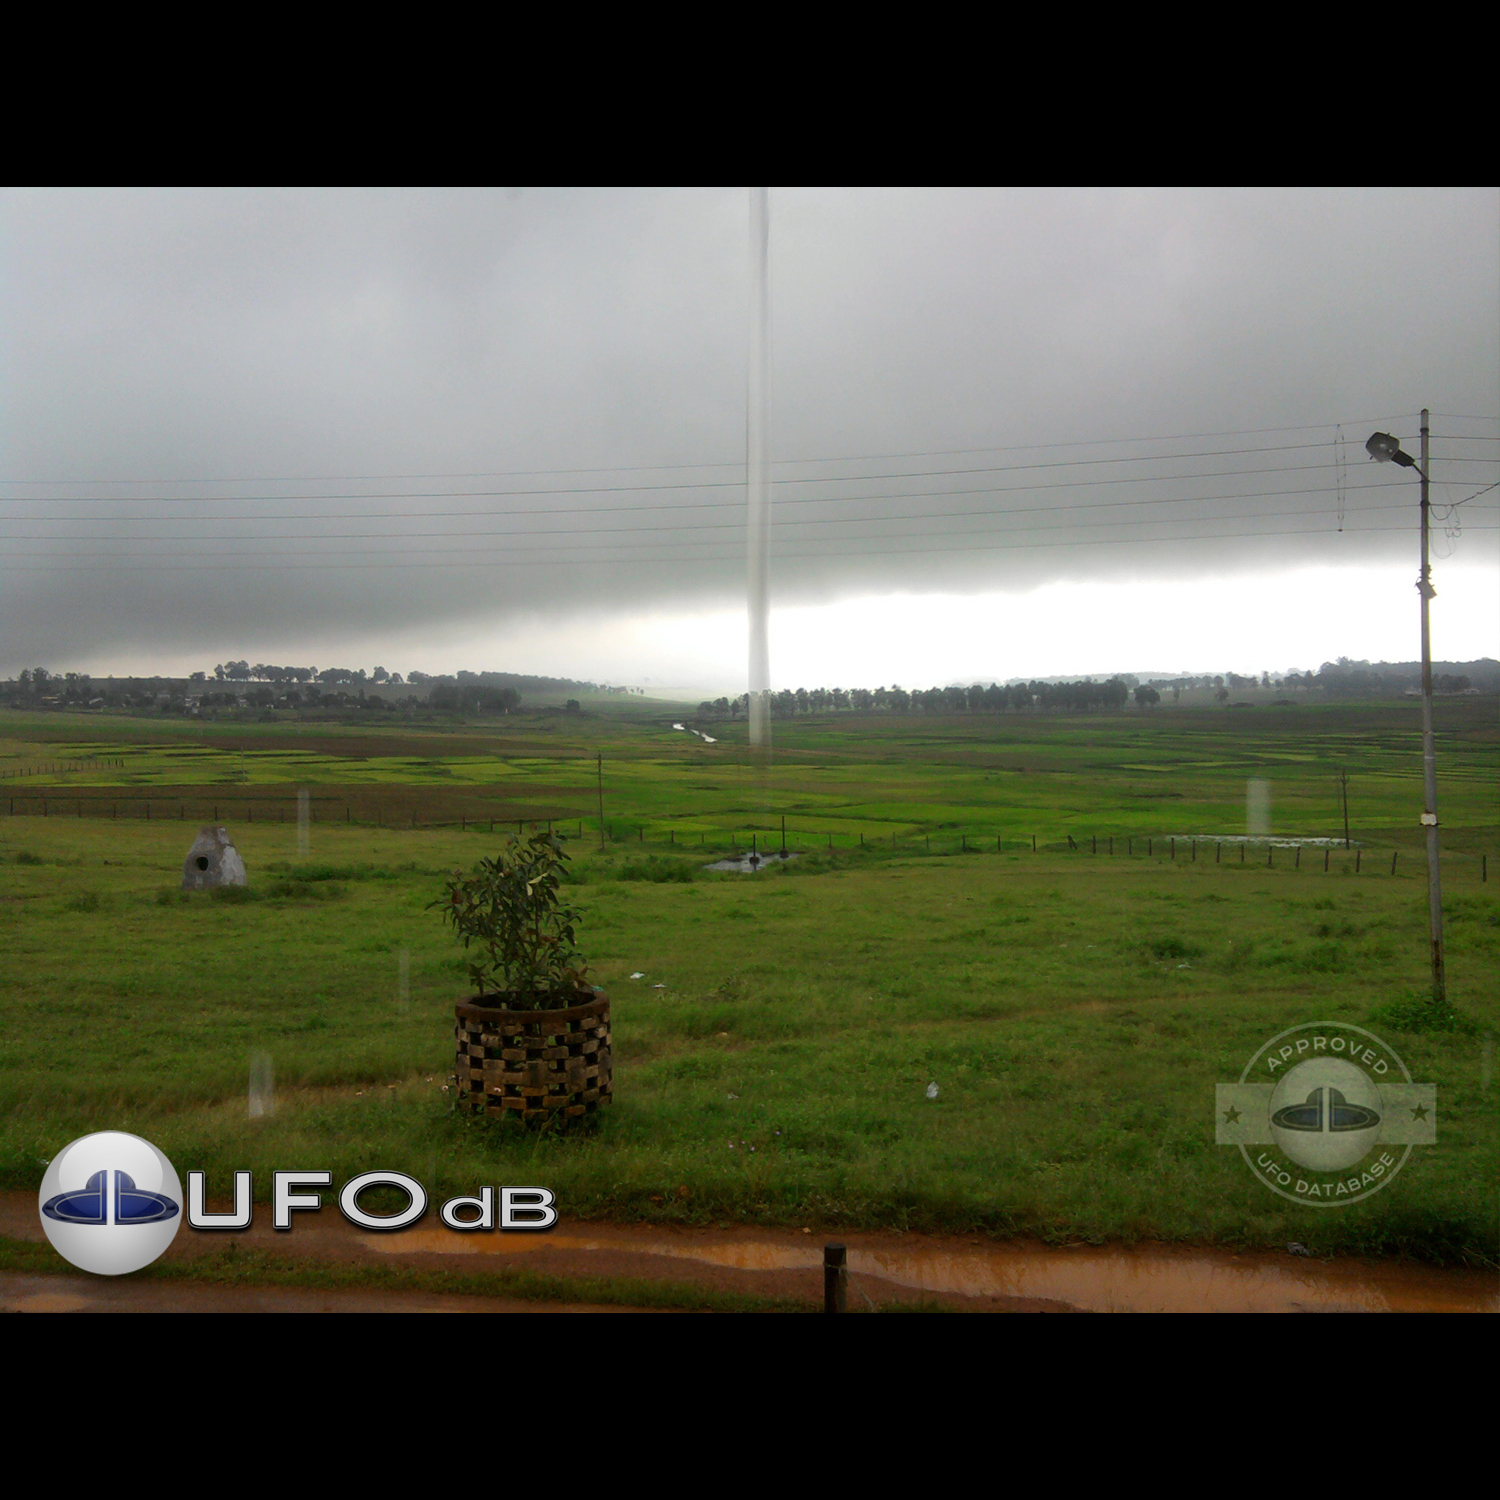 Strange cloud formation in India | Sighting in Mainpat, Chhattisgarh UFO Picture #152-1